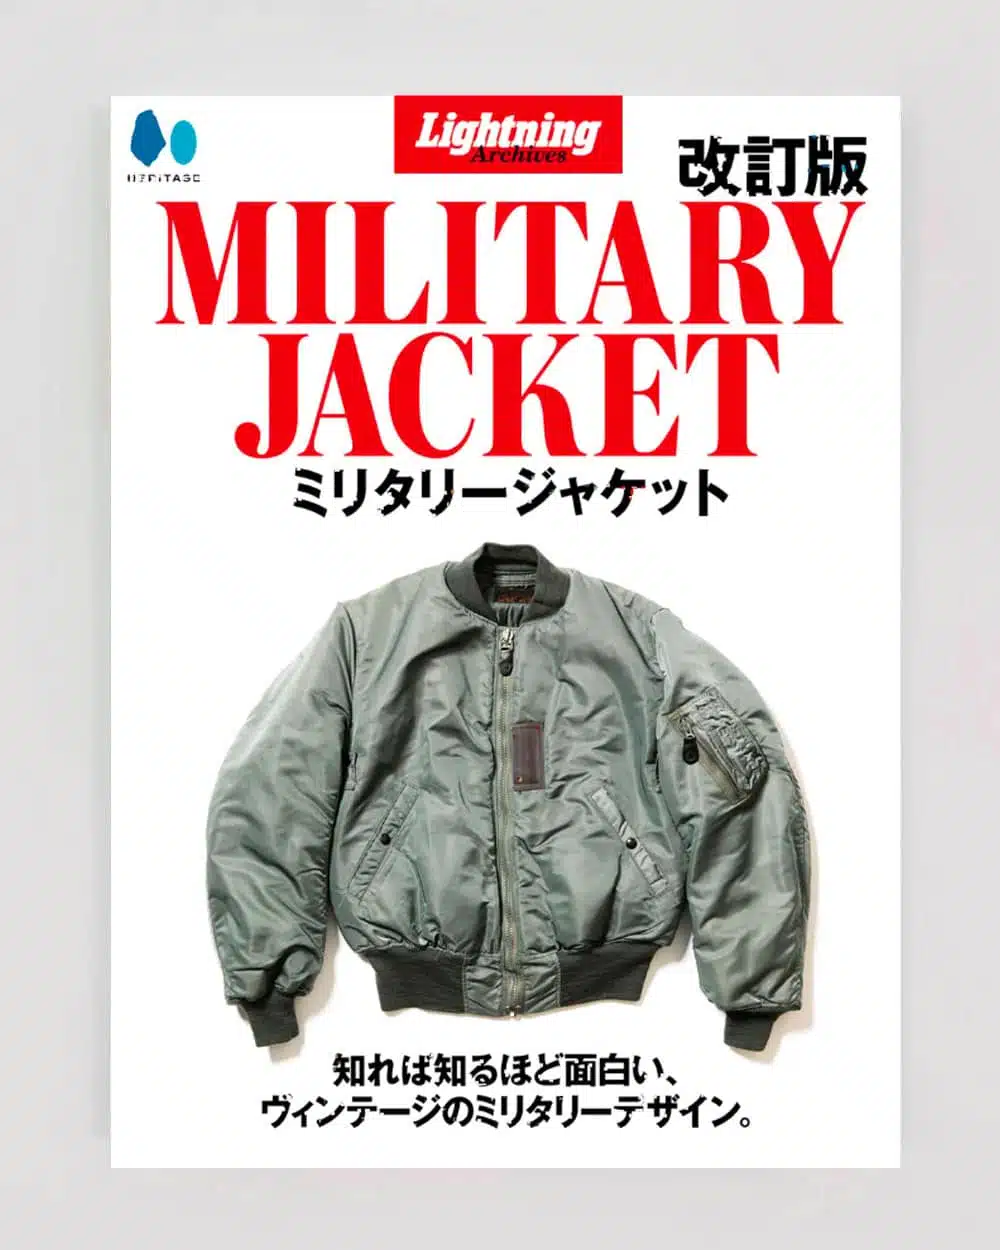 Lightning Archives Military Jacket